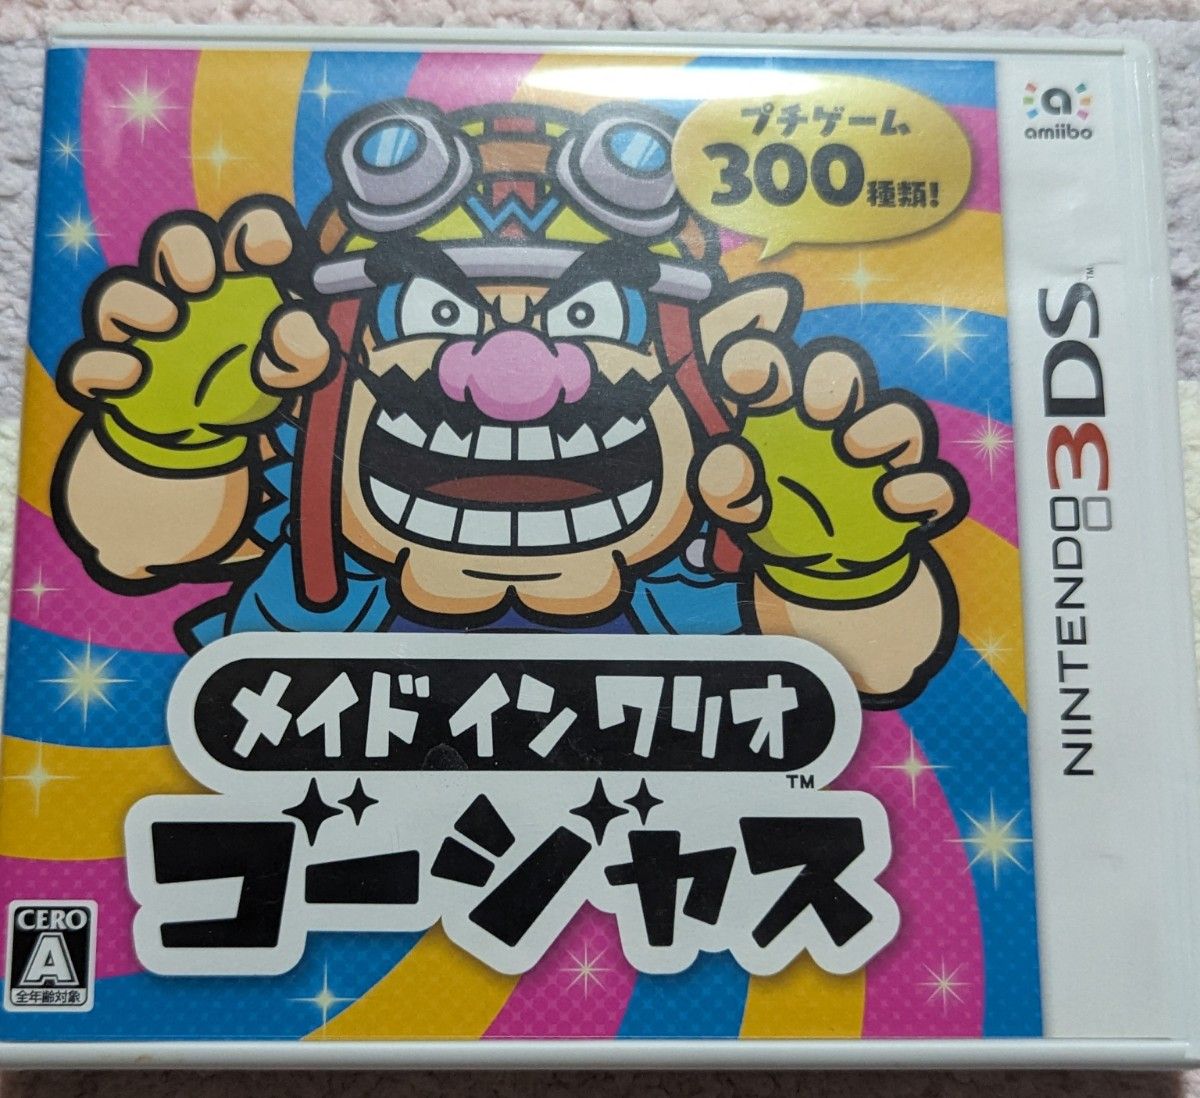 【3DS】 メイド イン ワリオ ゴージャス